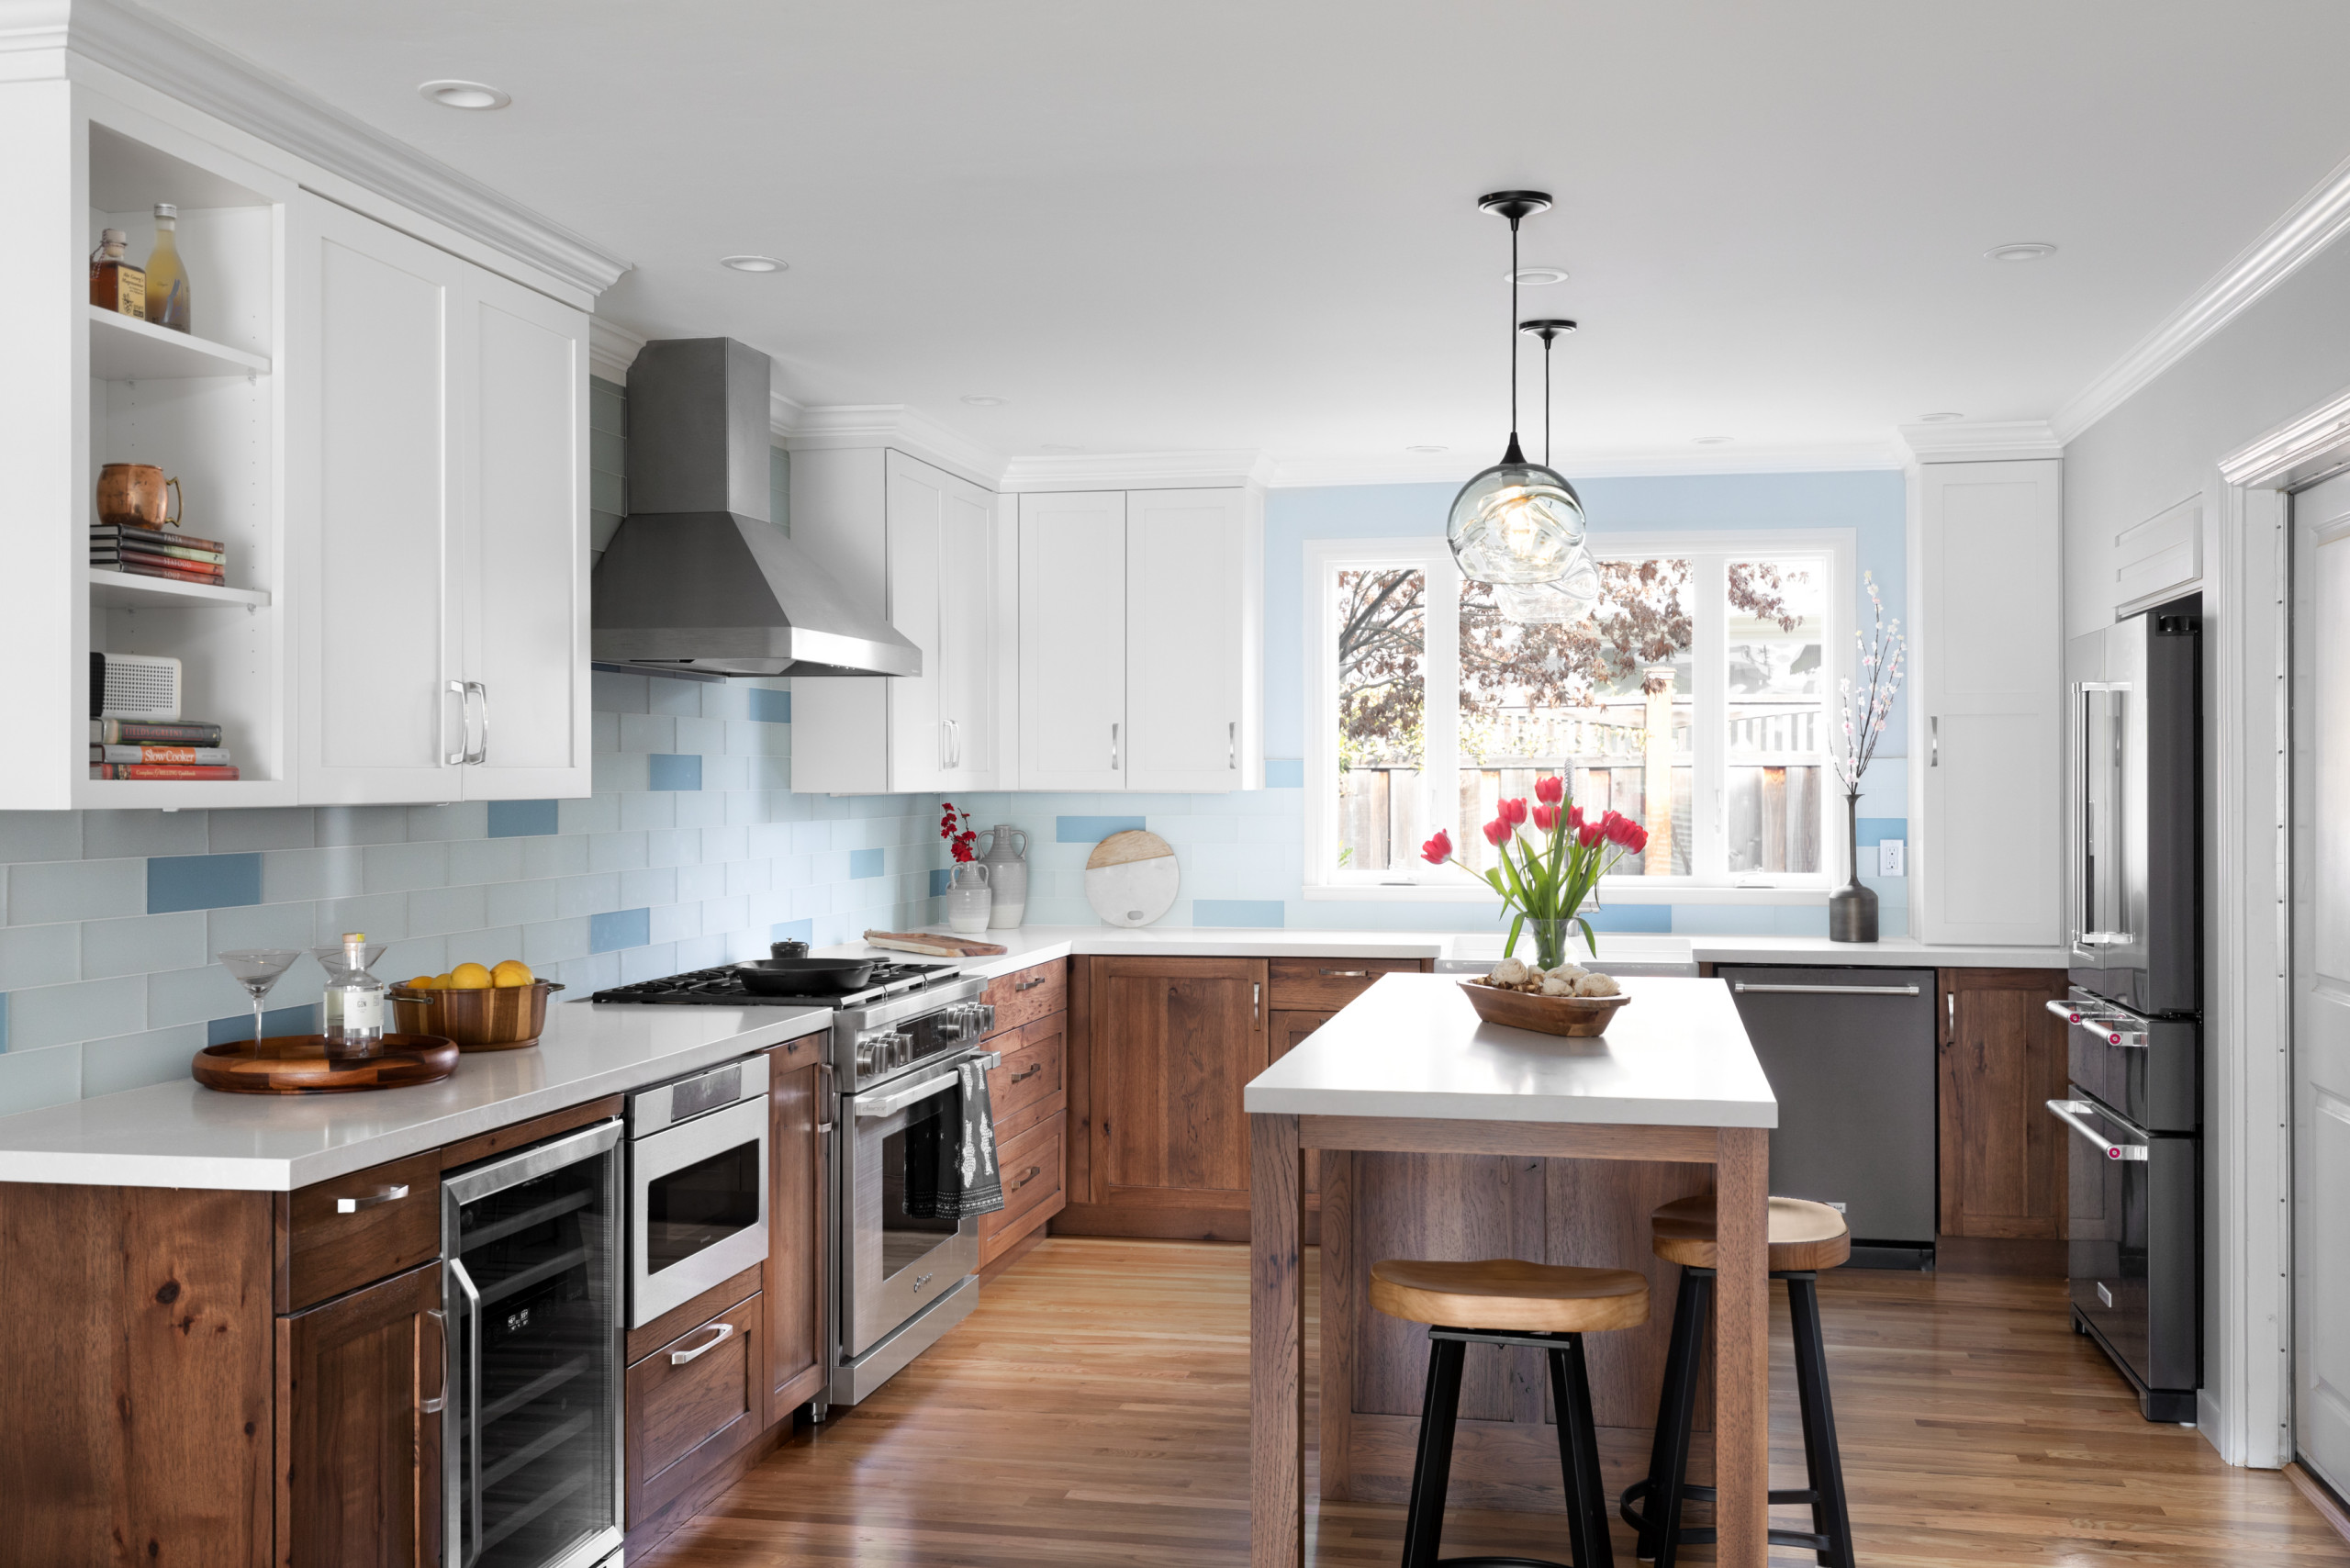 Kitchen Bench Ideas to Transform Your Home   Interior Design Ideas ...